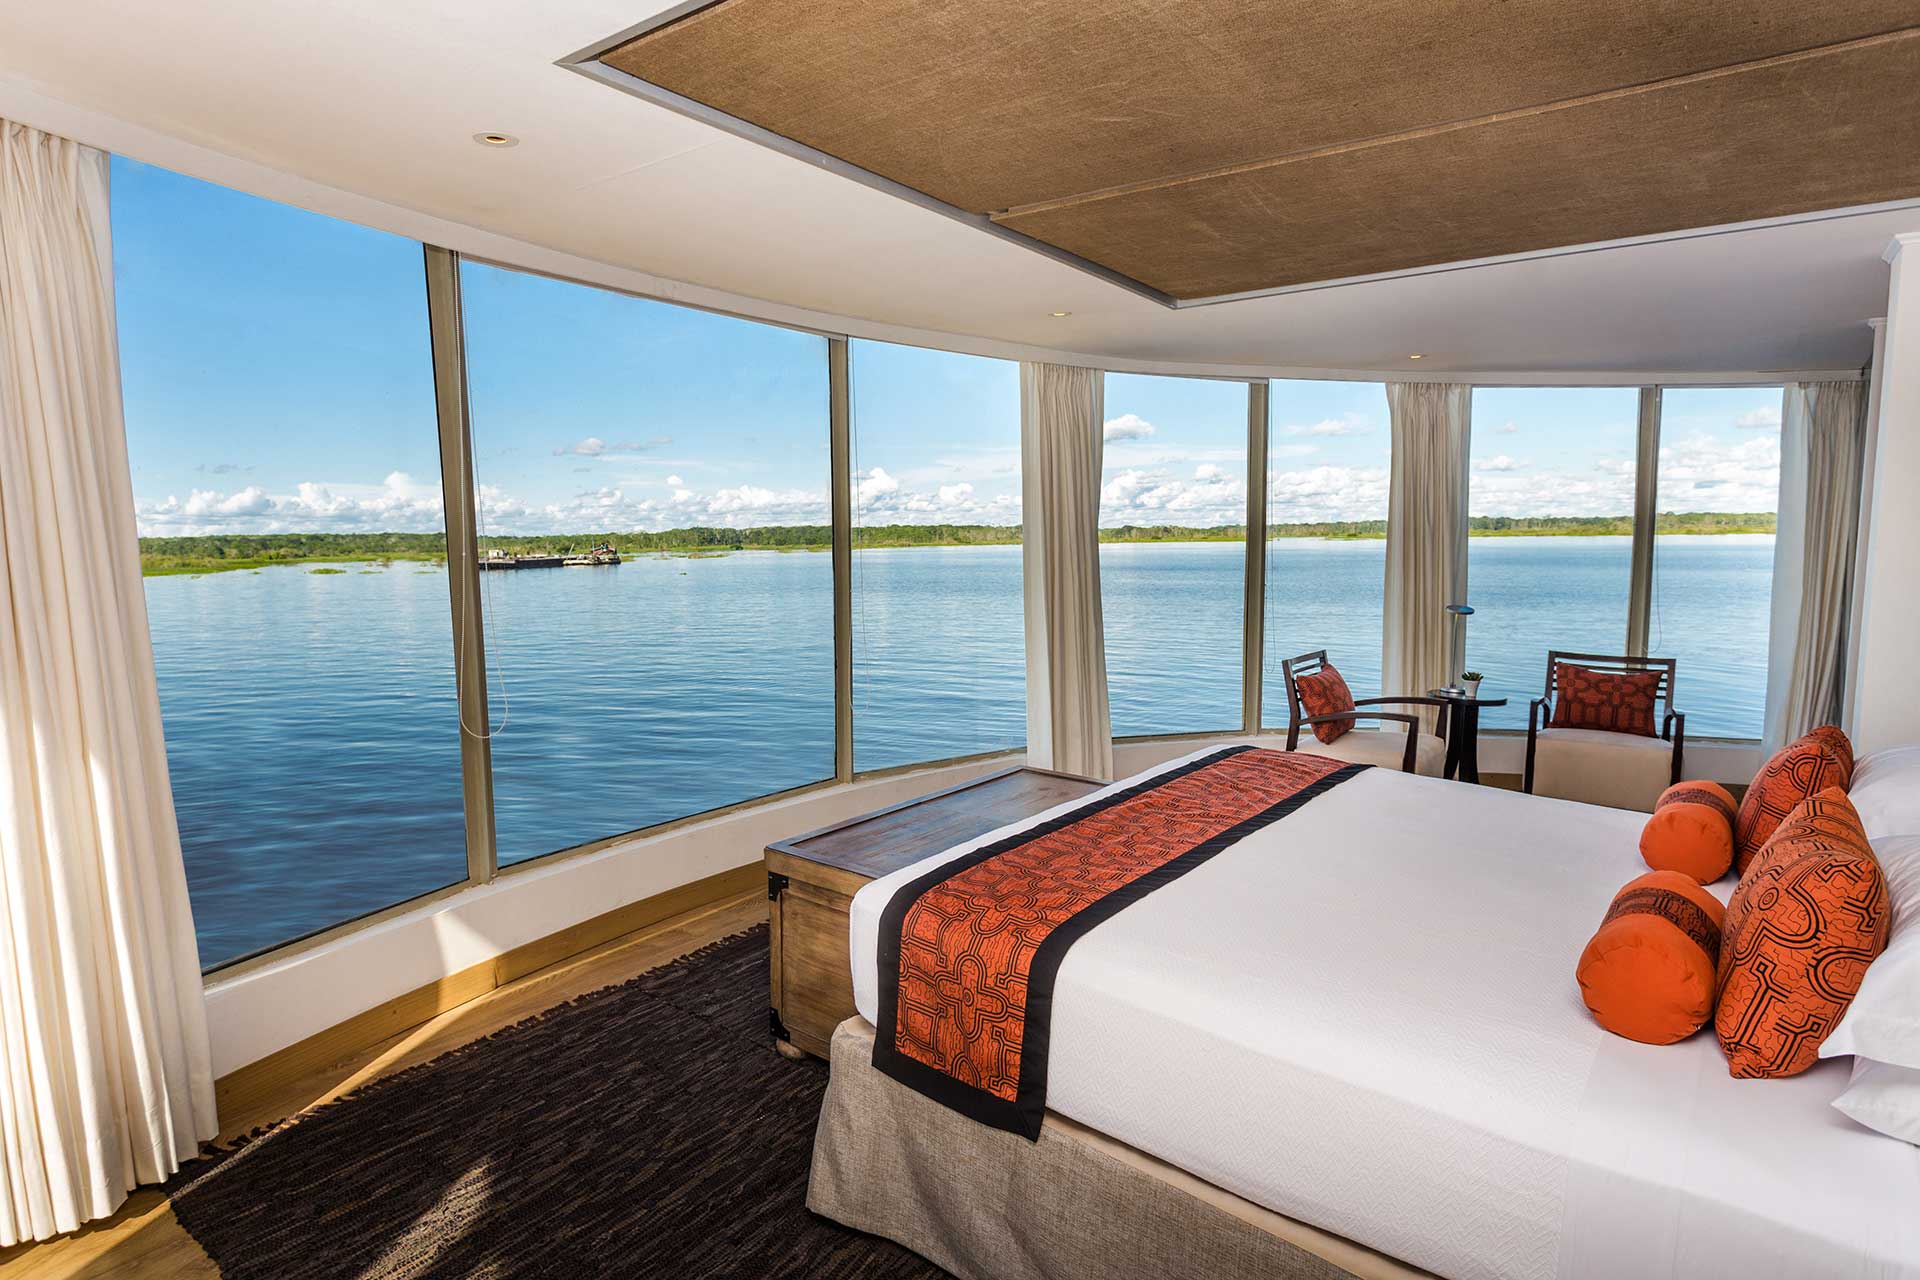 Owner’s Suites Aboard the Delfin III Amazon Cruise